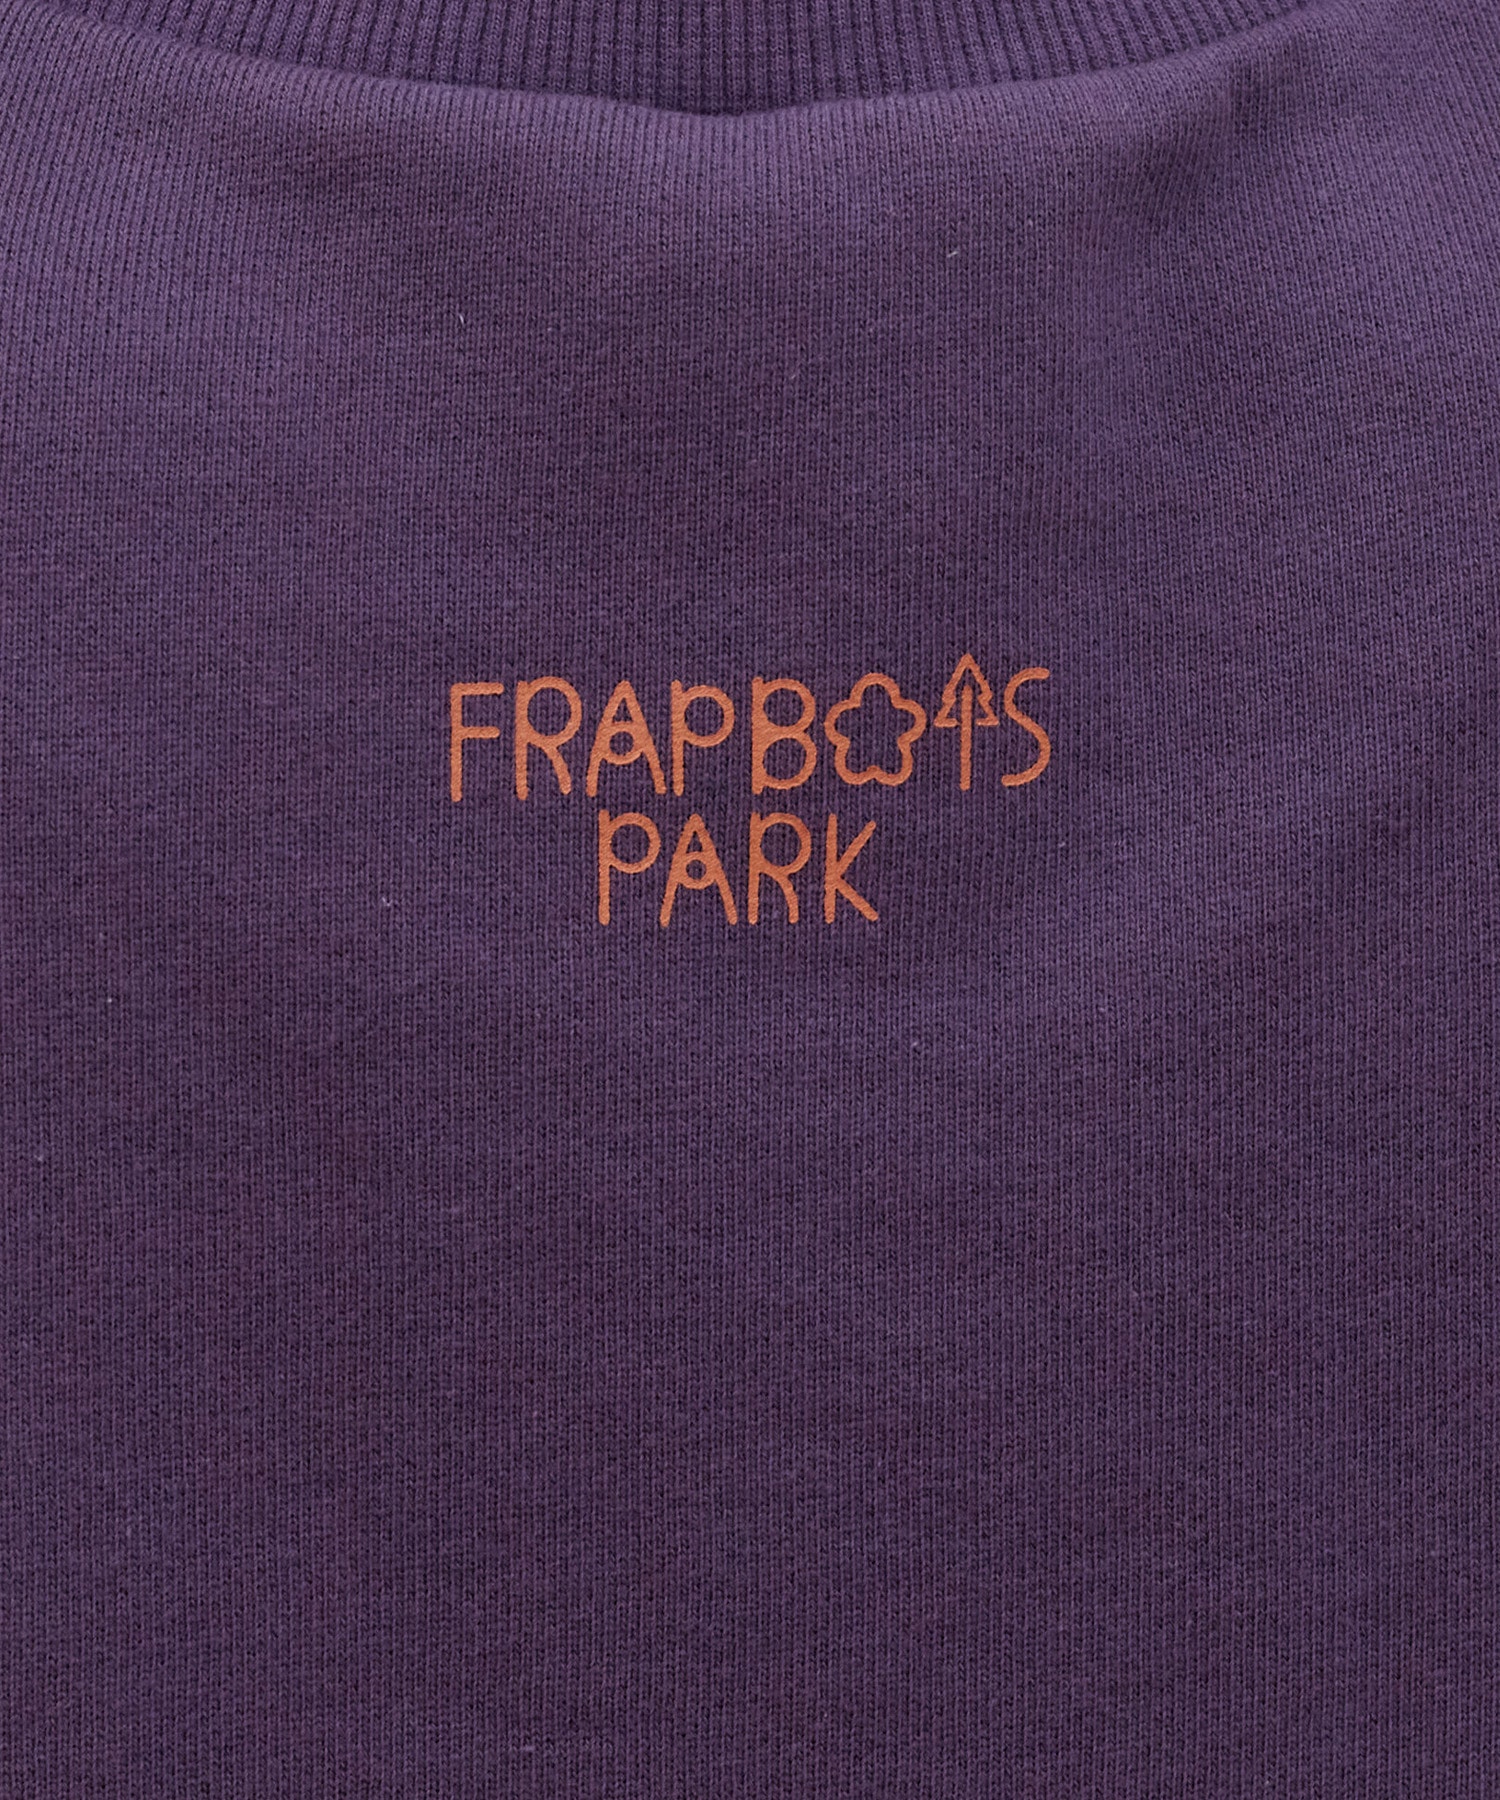 【FRAPBOIS PARK】マークトレーナー 詳細画像 ブラック 21